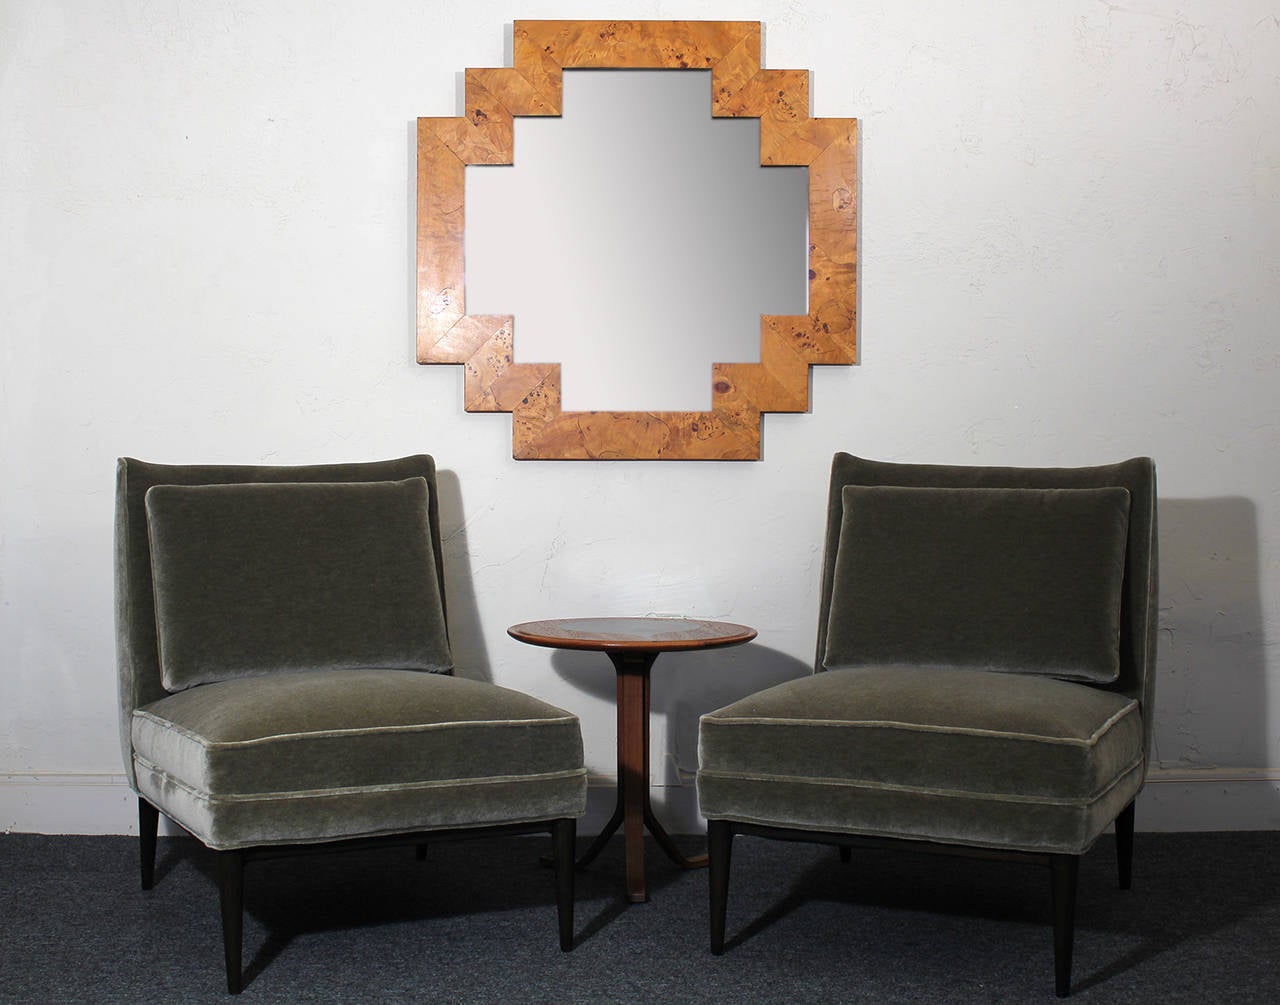 20th Century Deco Italian Burl Wood Mirror